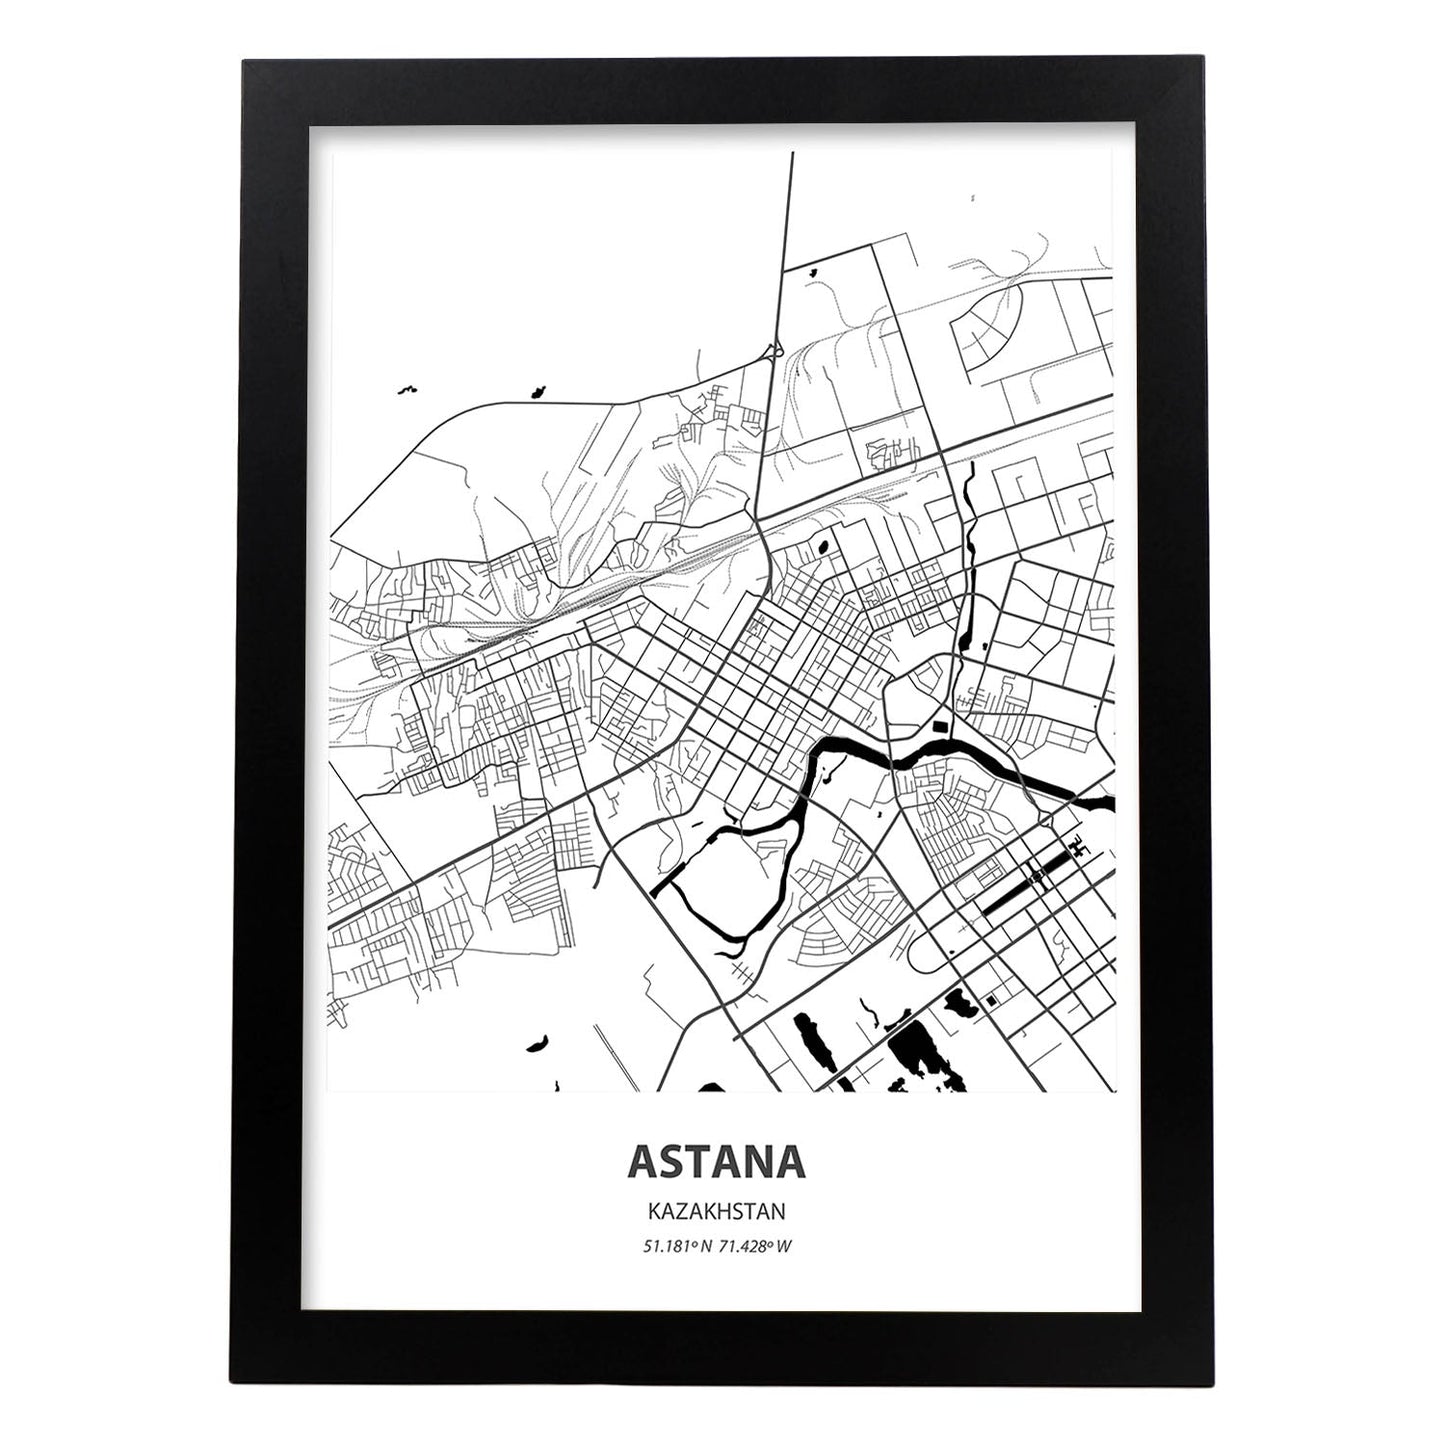 Poster con mapa de Astana - Kazajistán. Láminas de ciudades de Asia con mares y ríos en color negro.-Artwork-Nacnic-A3-Marco Negro-Nacnic Estudio SL